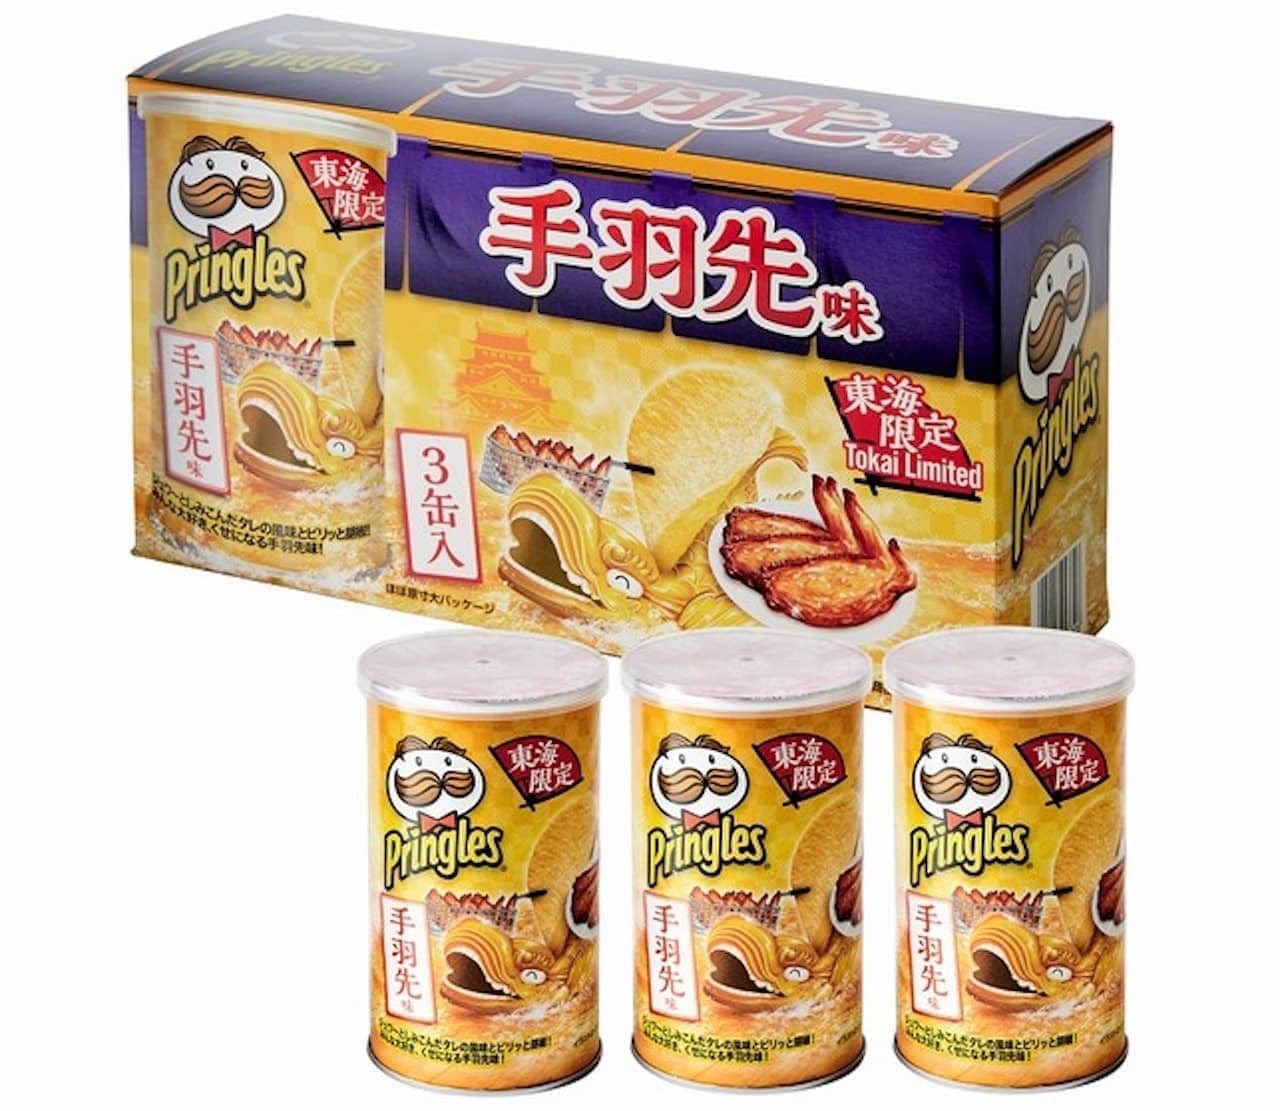 Pringles Tebasaki Flavor" Souvenir Series Limited to Local Areas